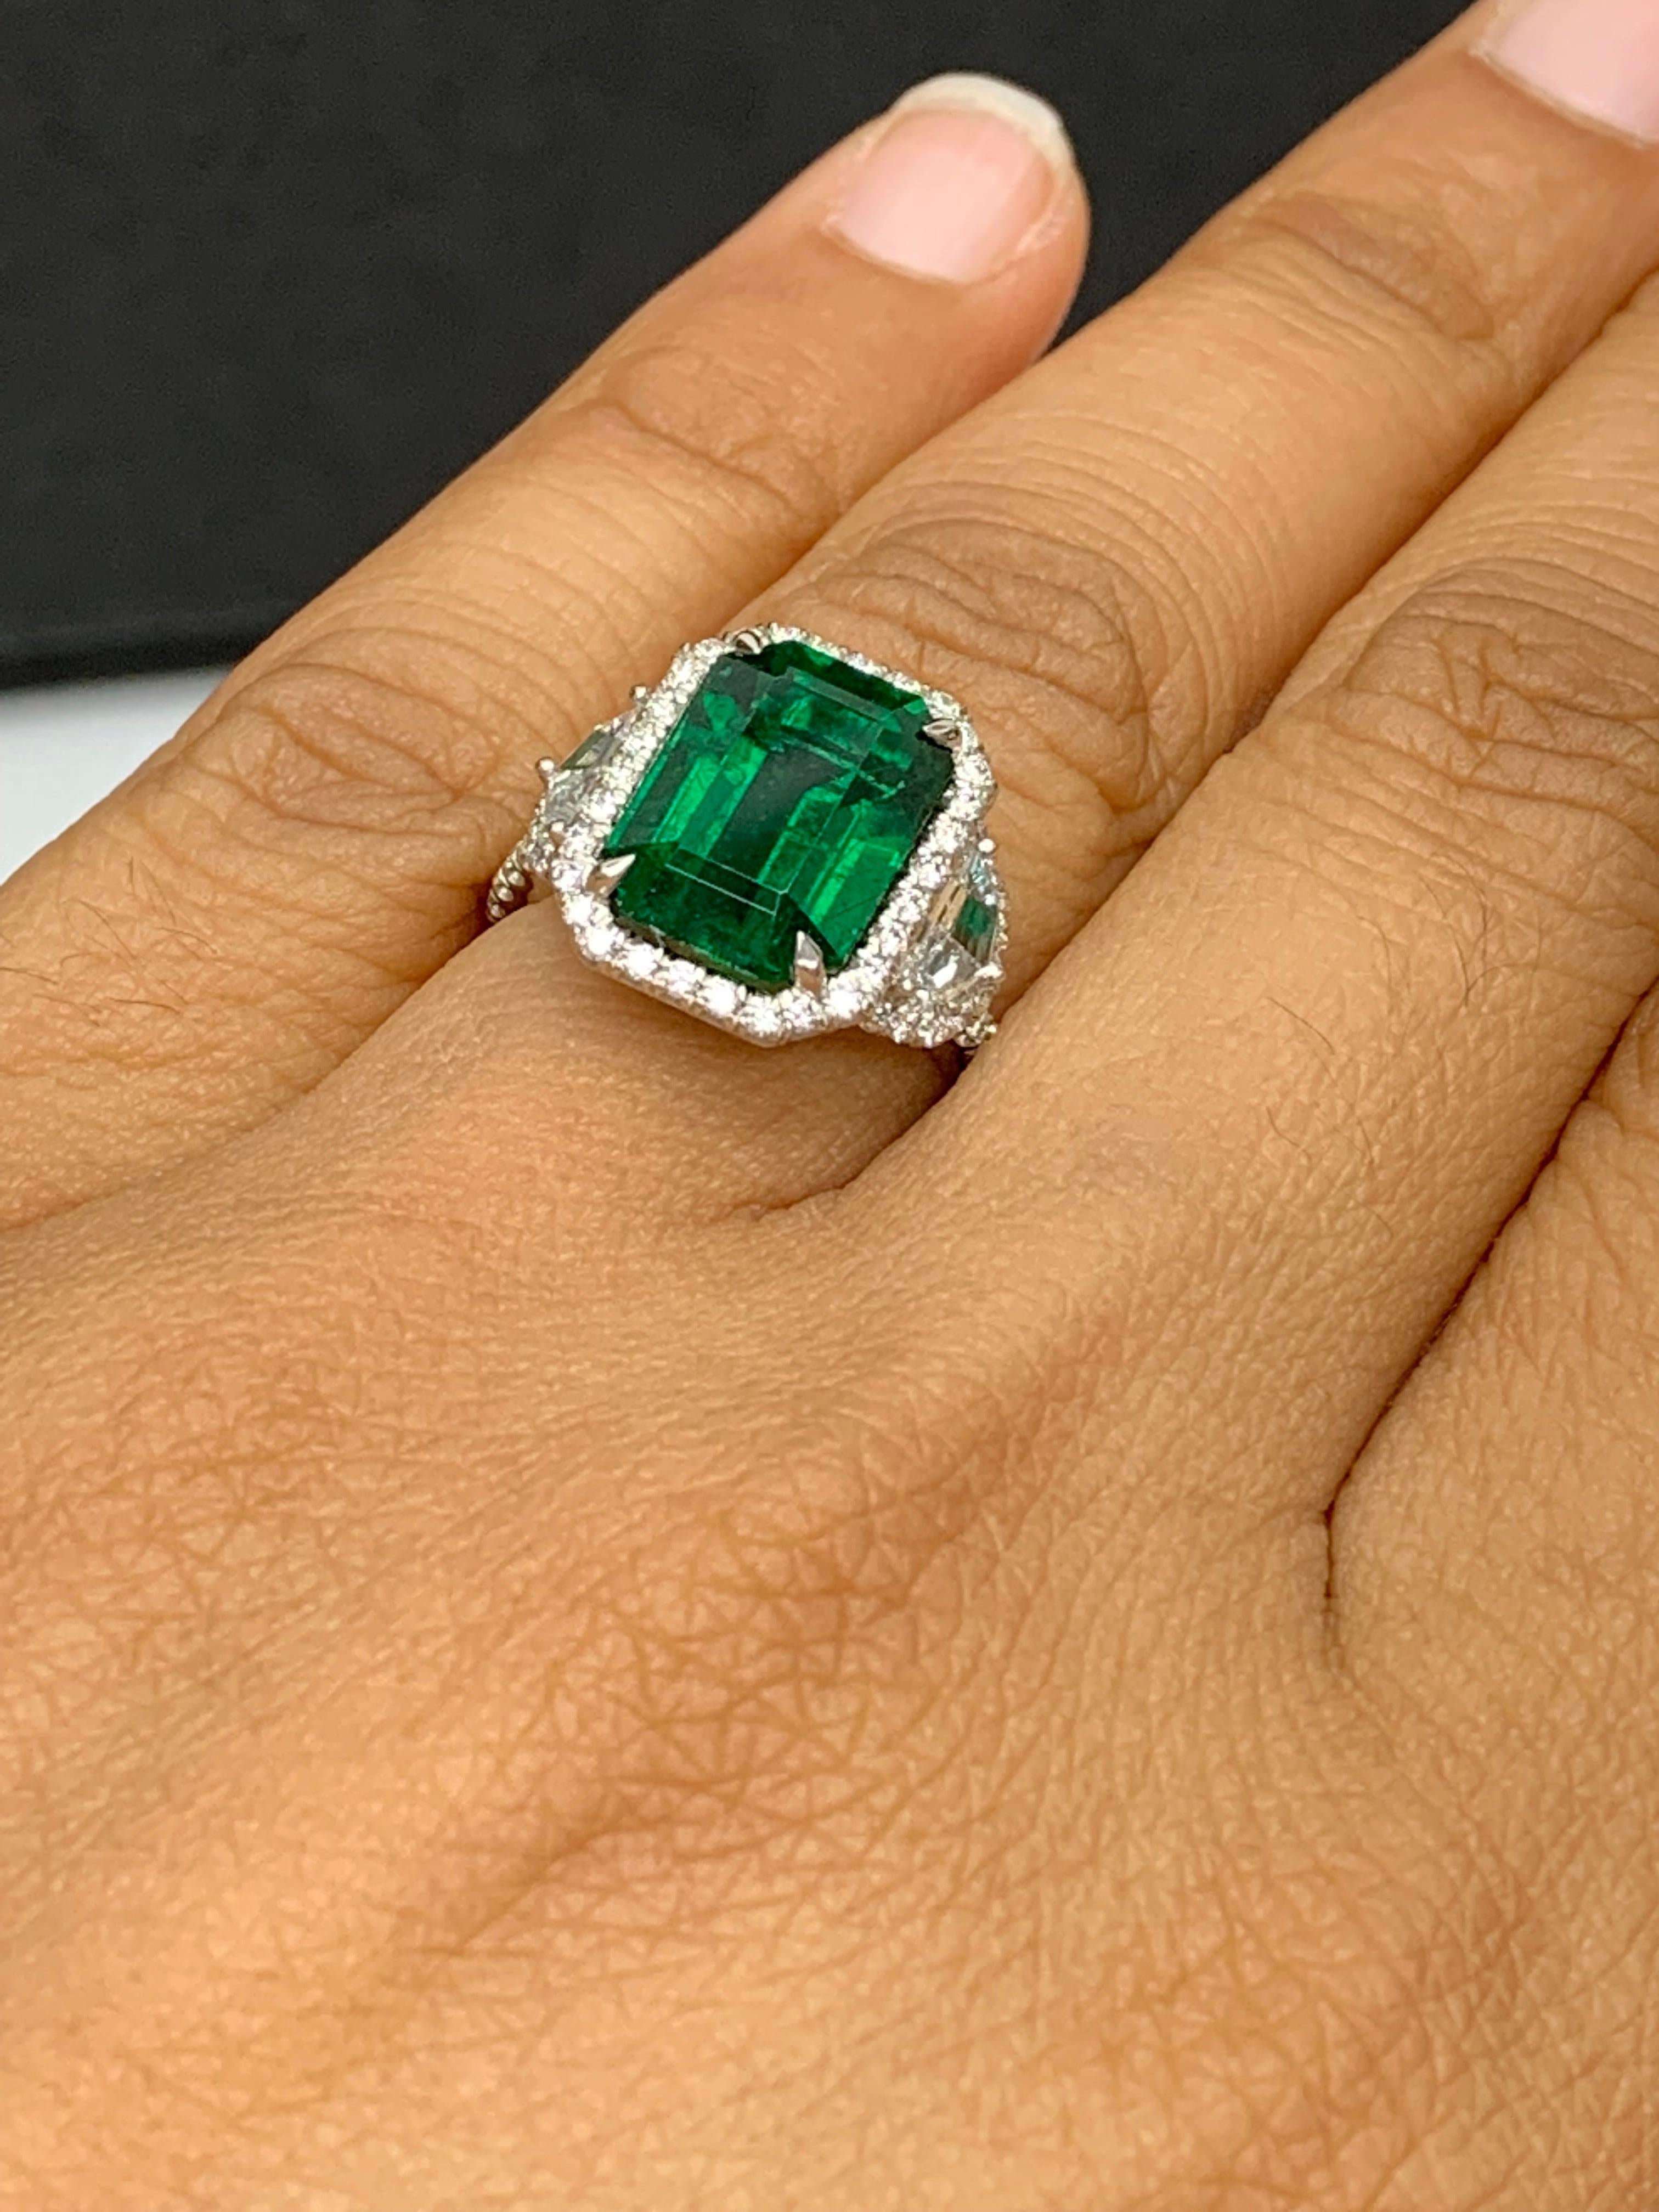 GIA Certified 4.07 Carat Emerald Cut Emerald Diamond 3 Stone Ring in Platinum For Sale 5